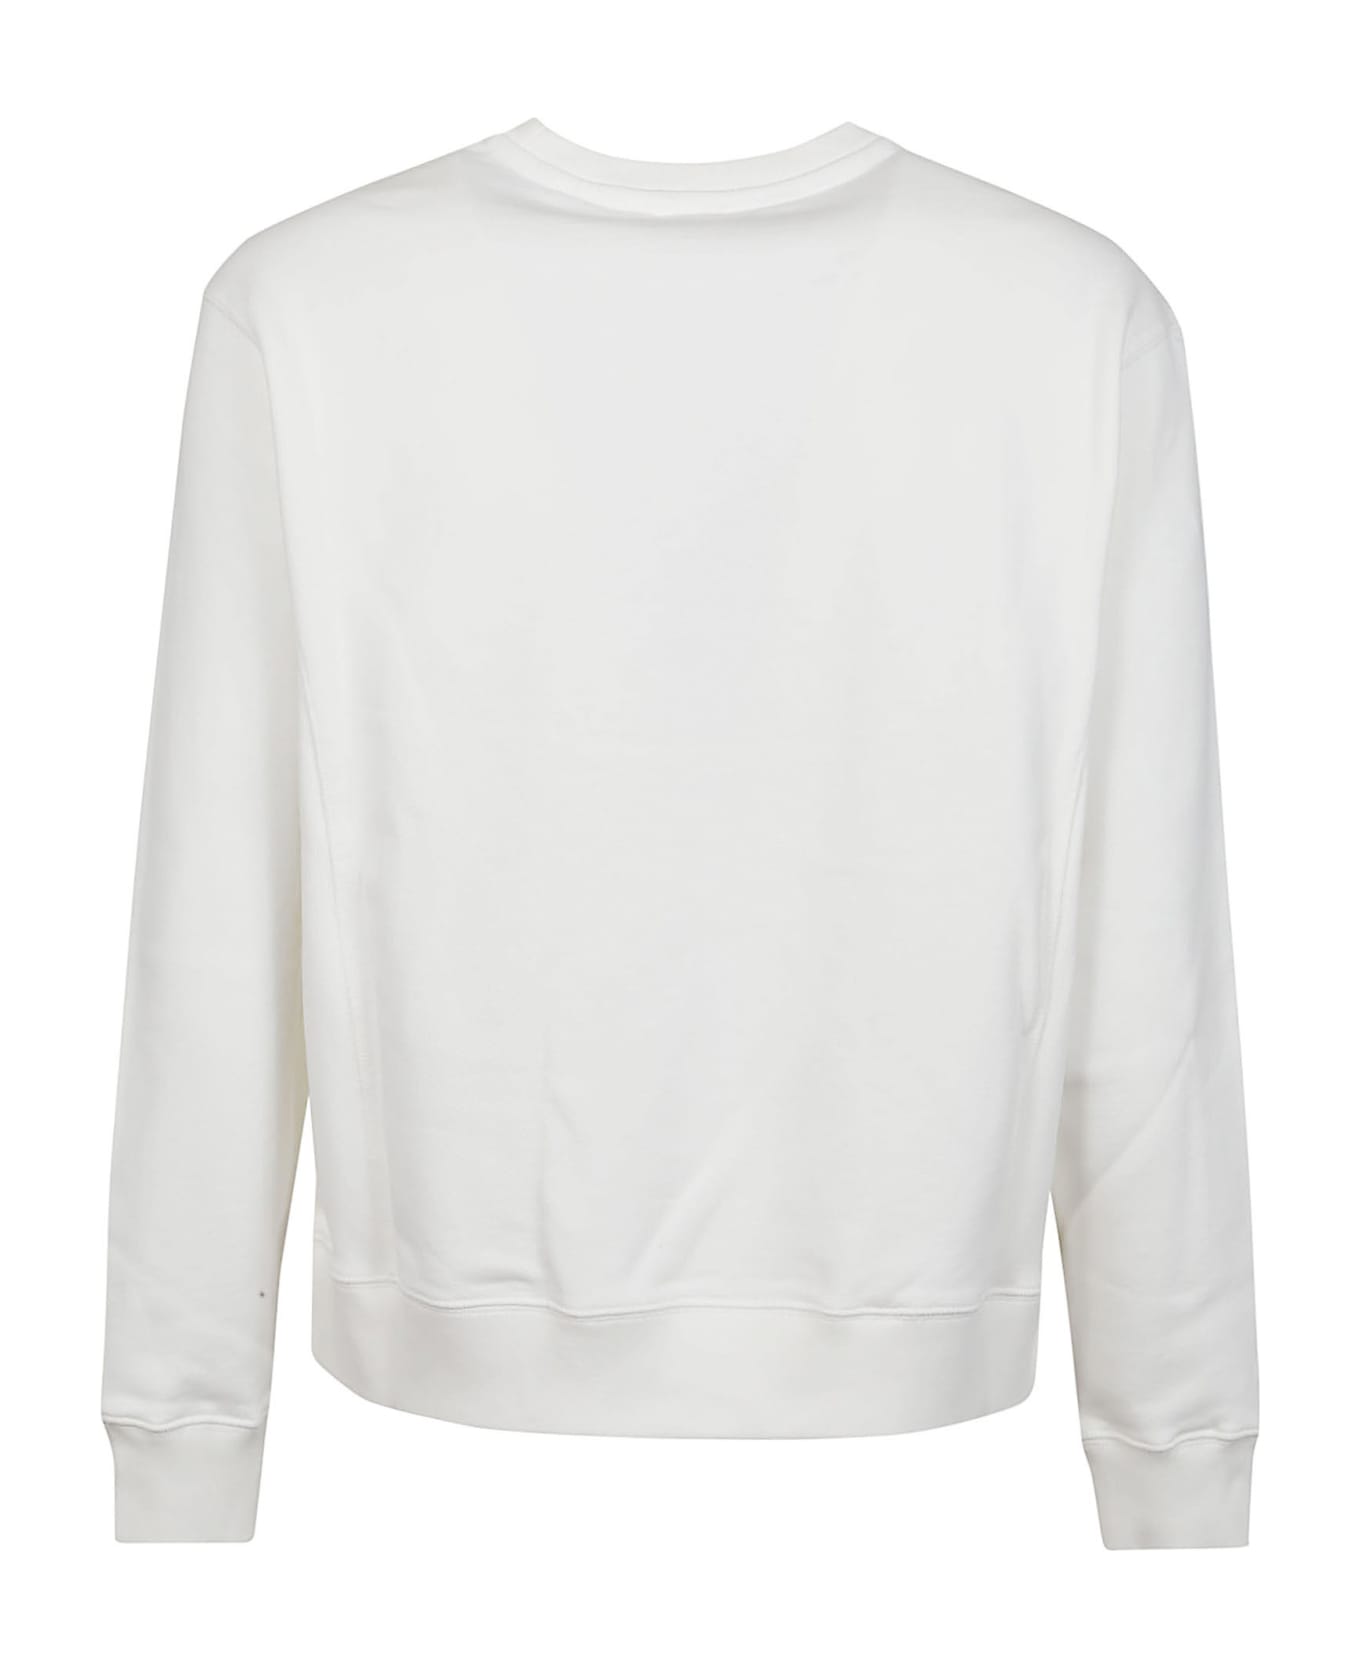 Kenzo By Verdy Classic Sweatshirt - Blanc Casse